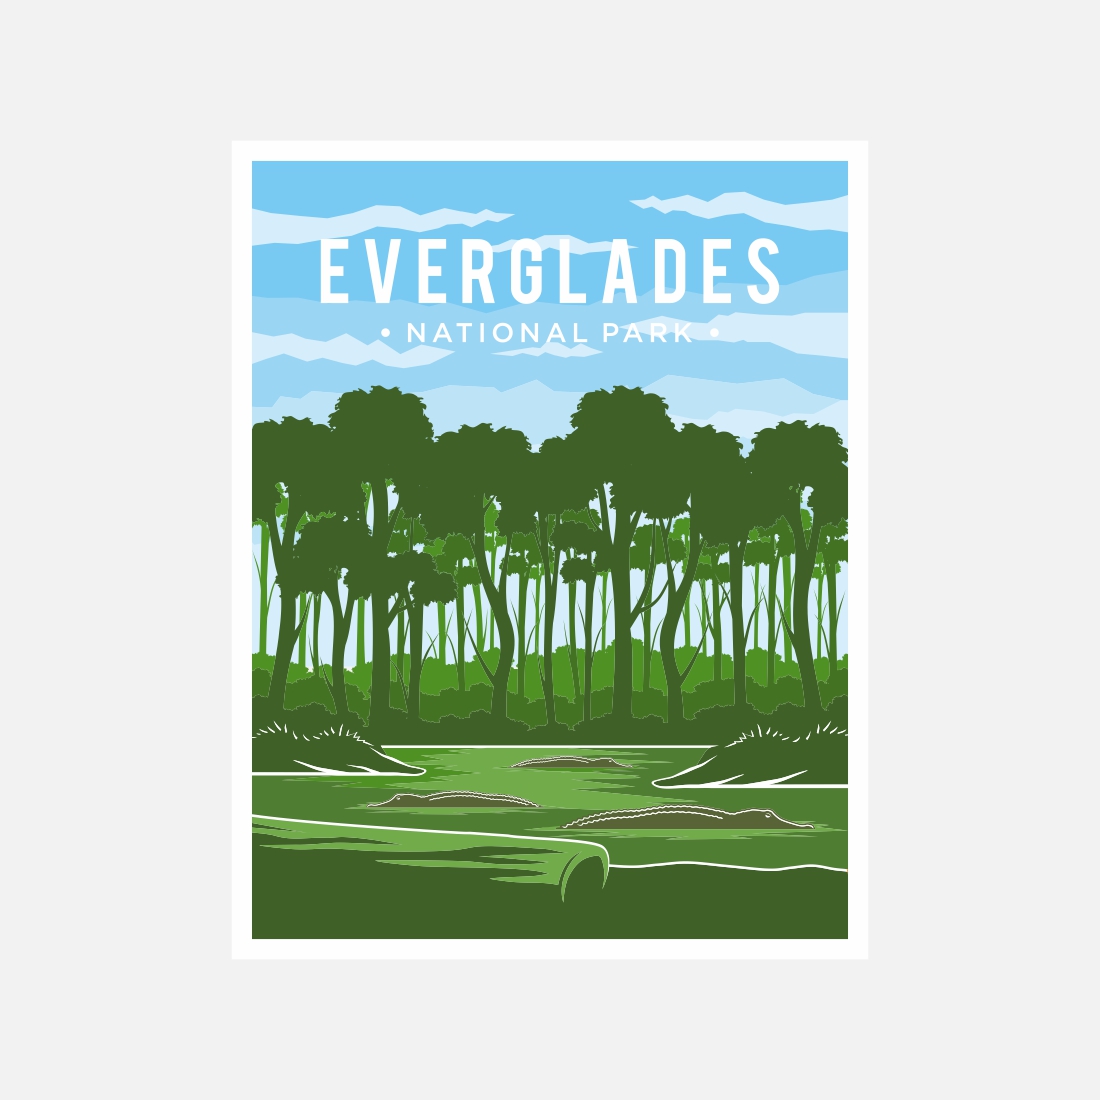 Everglades National Park poster vector illustration design – Only $8 preview image.